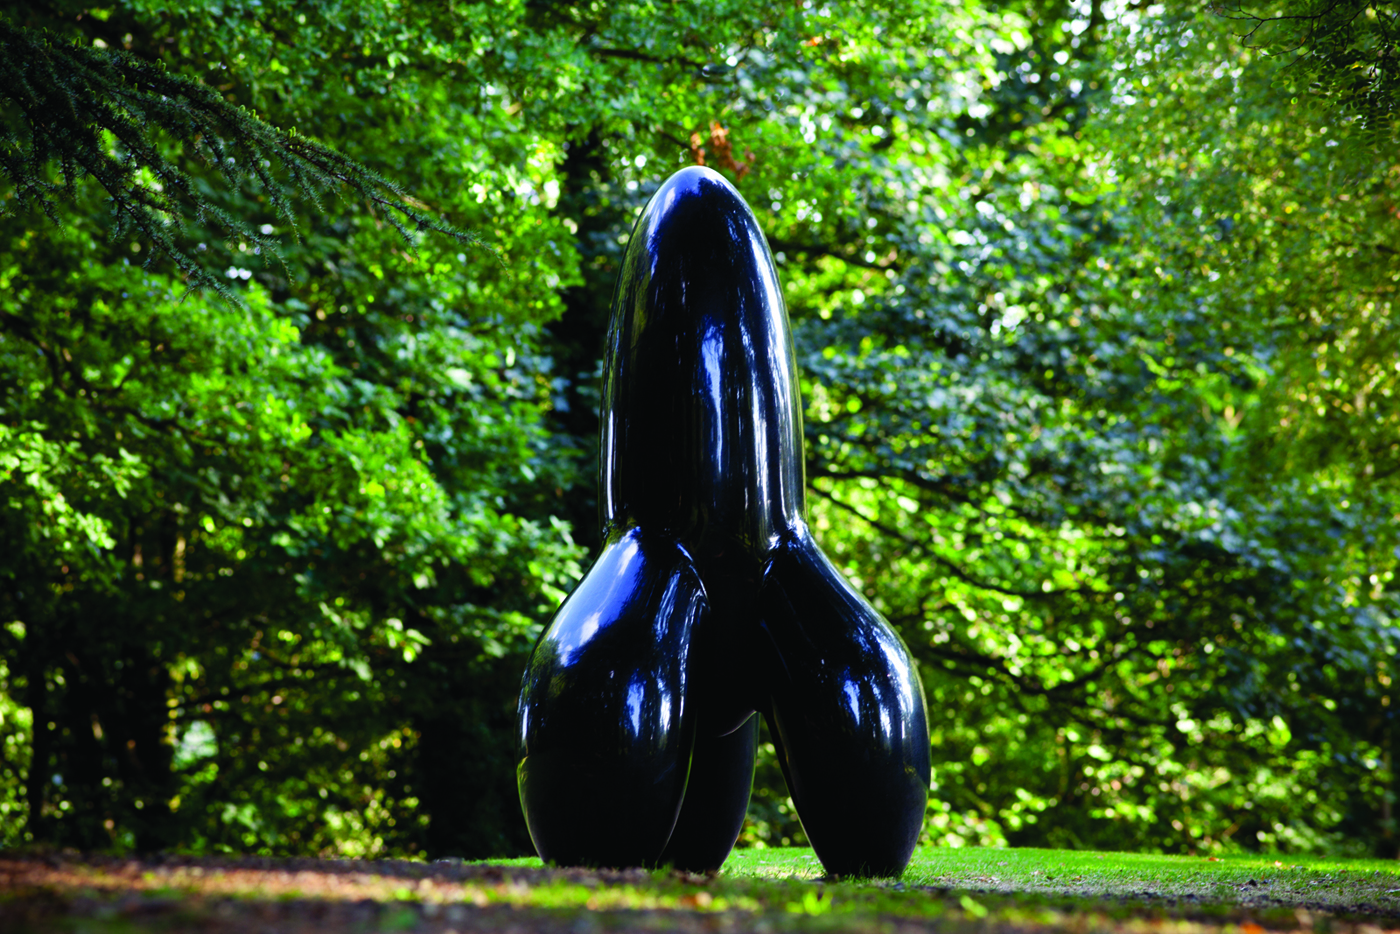 A tall rocket shaped black sculpture